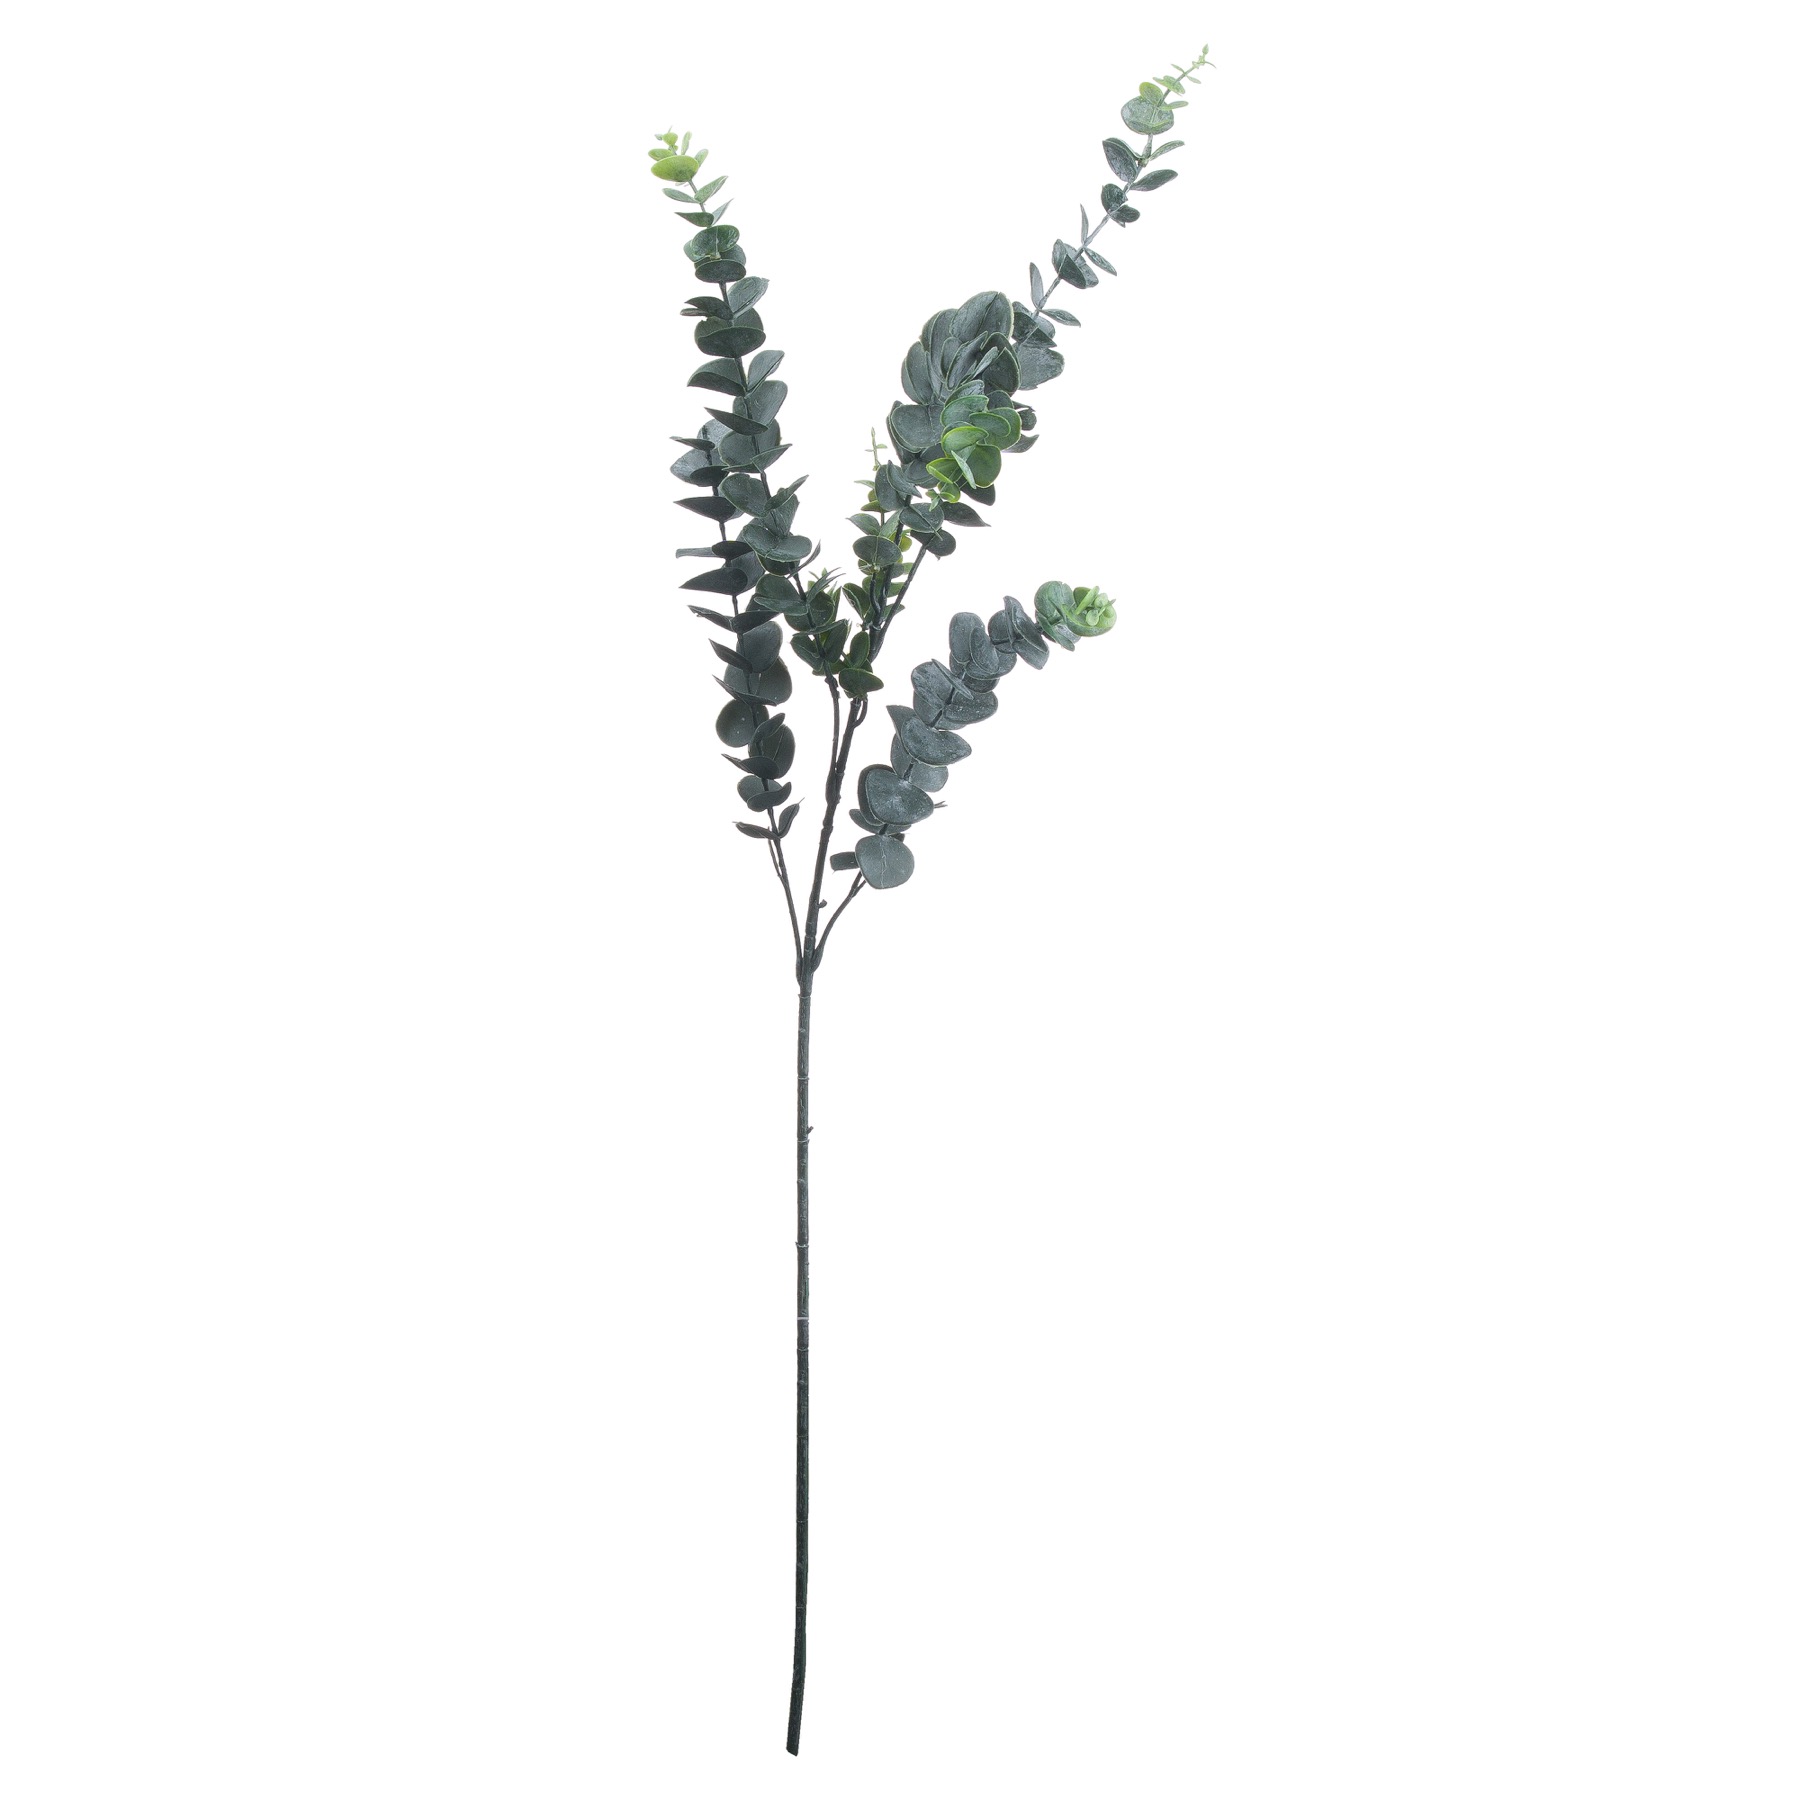 Silver Dollar Eucalyptus - Image 1